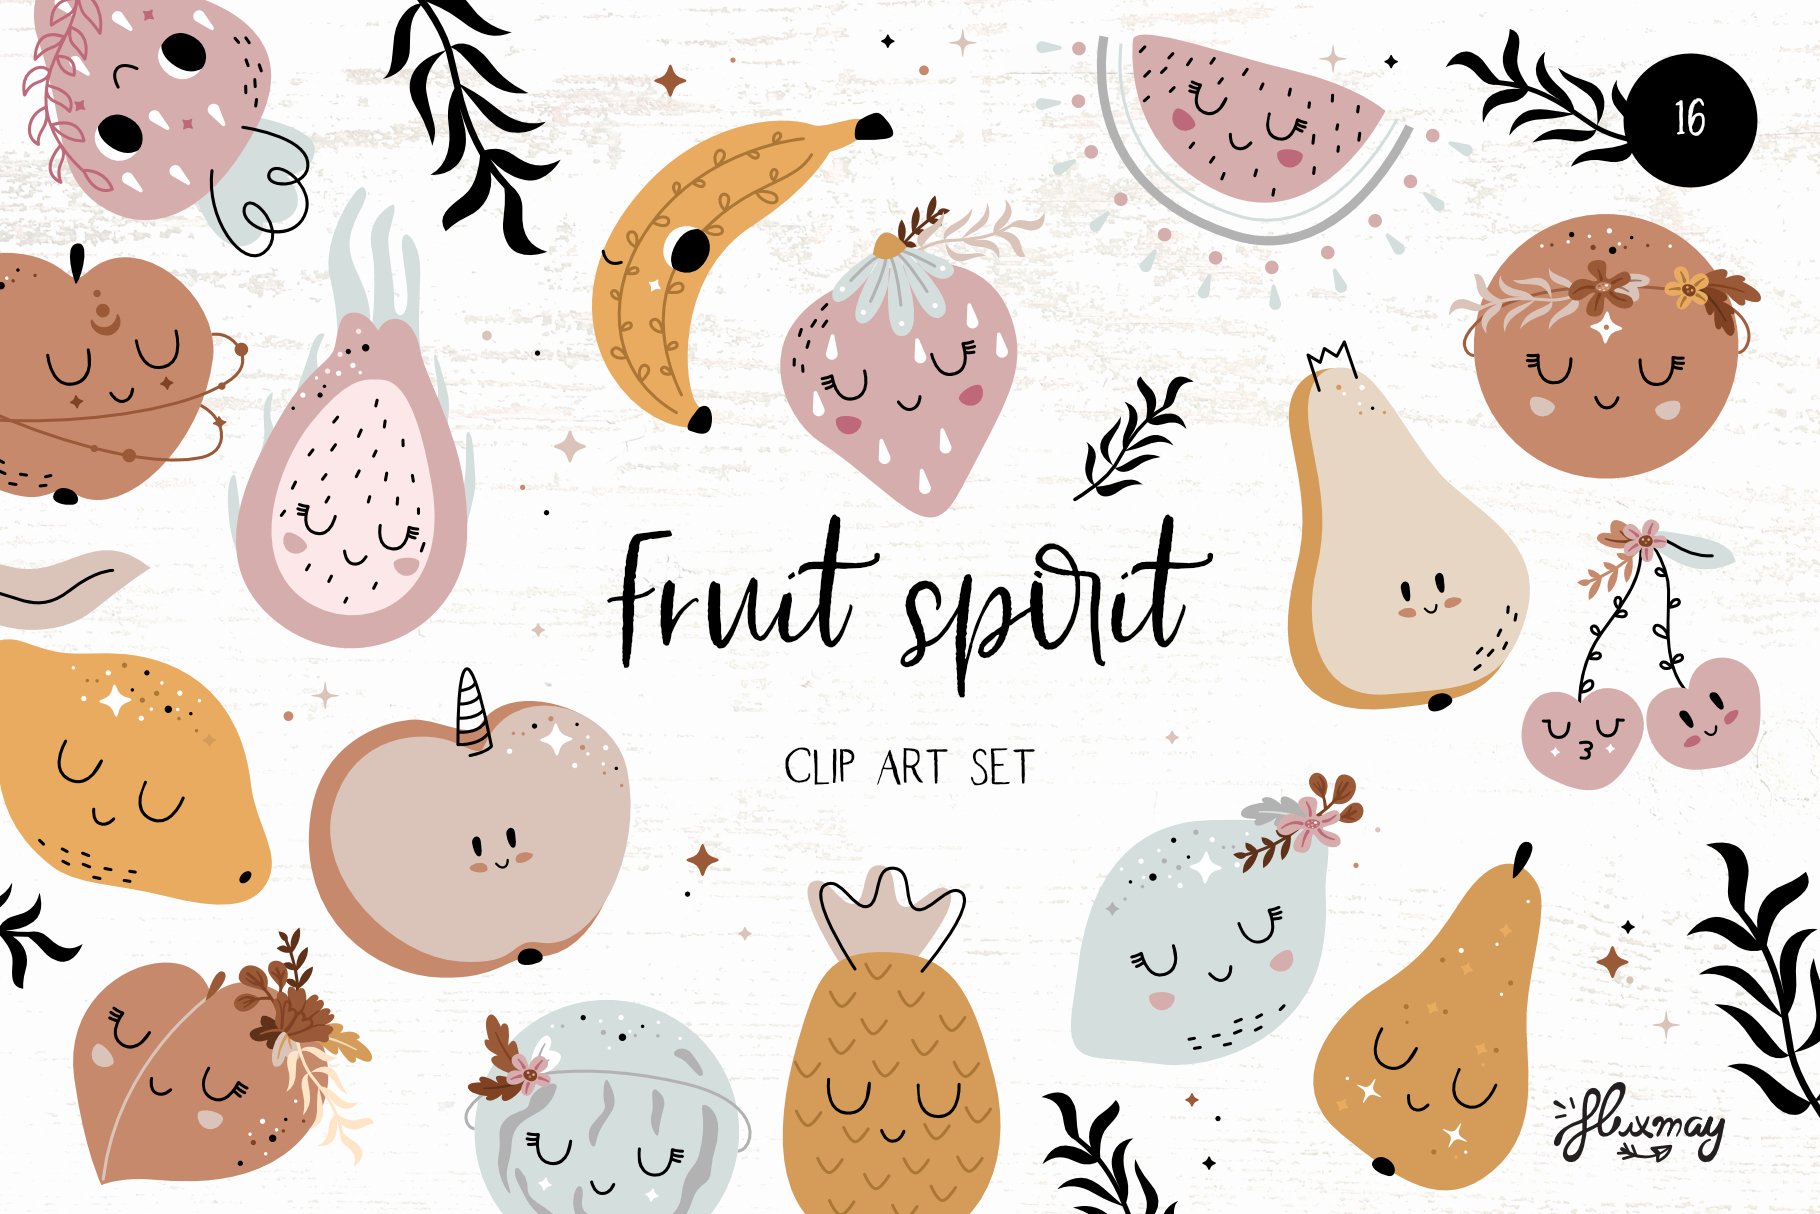 Fruit spirit - clip art set cover image.